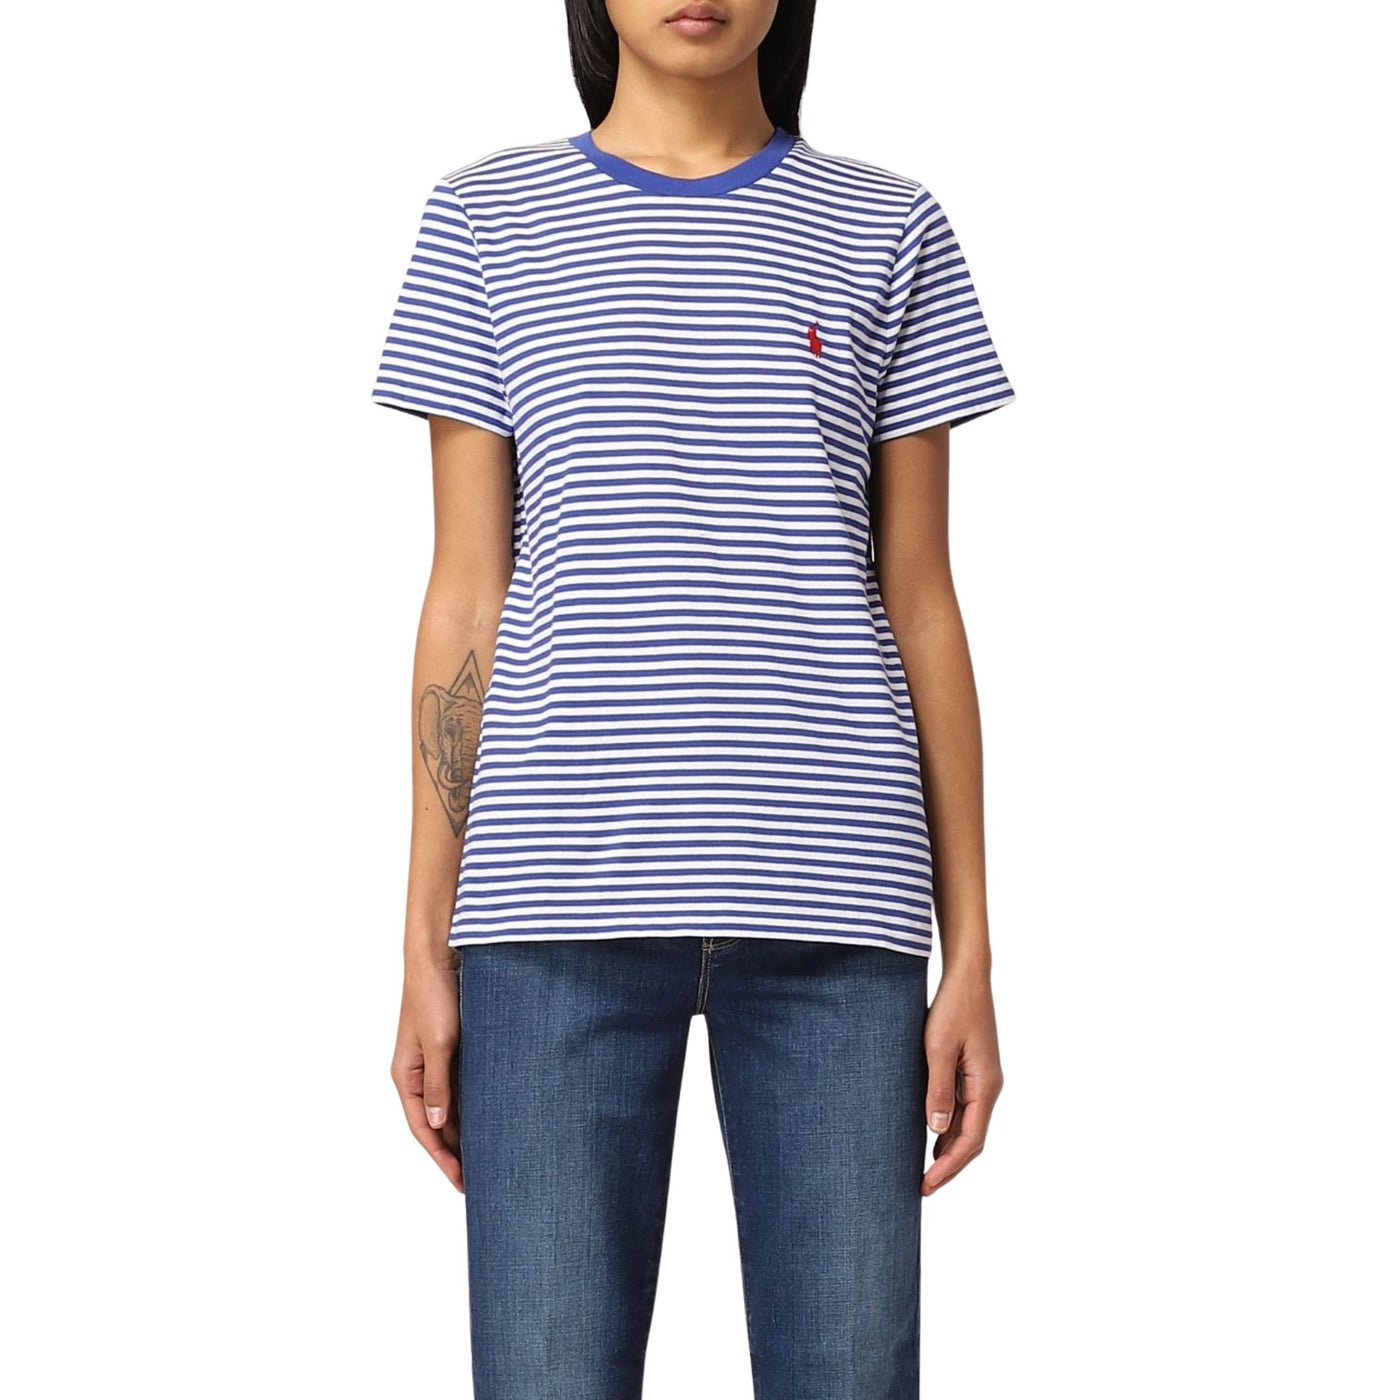 T-shirt donna Polo Ralph Lauren su modella vista frontale